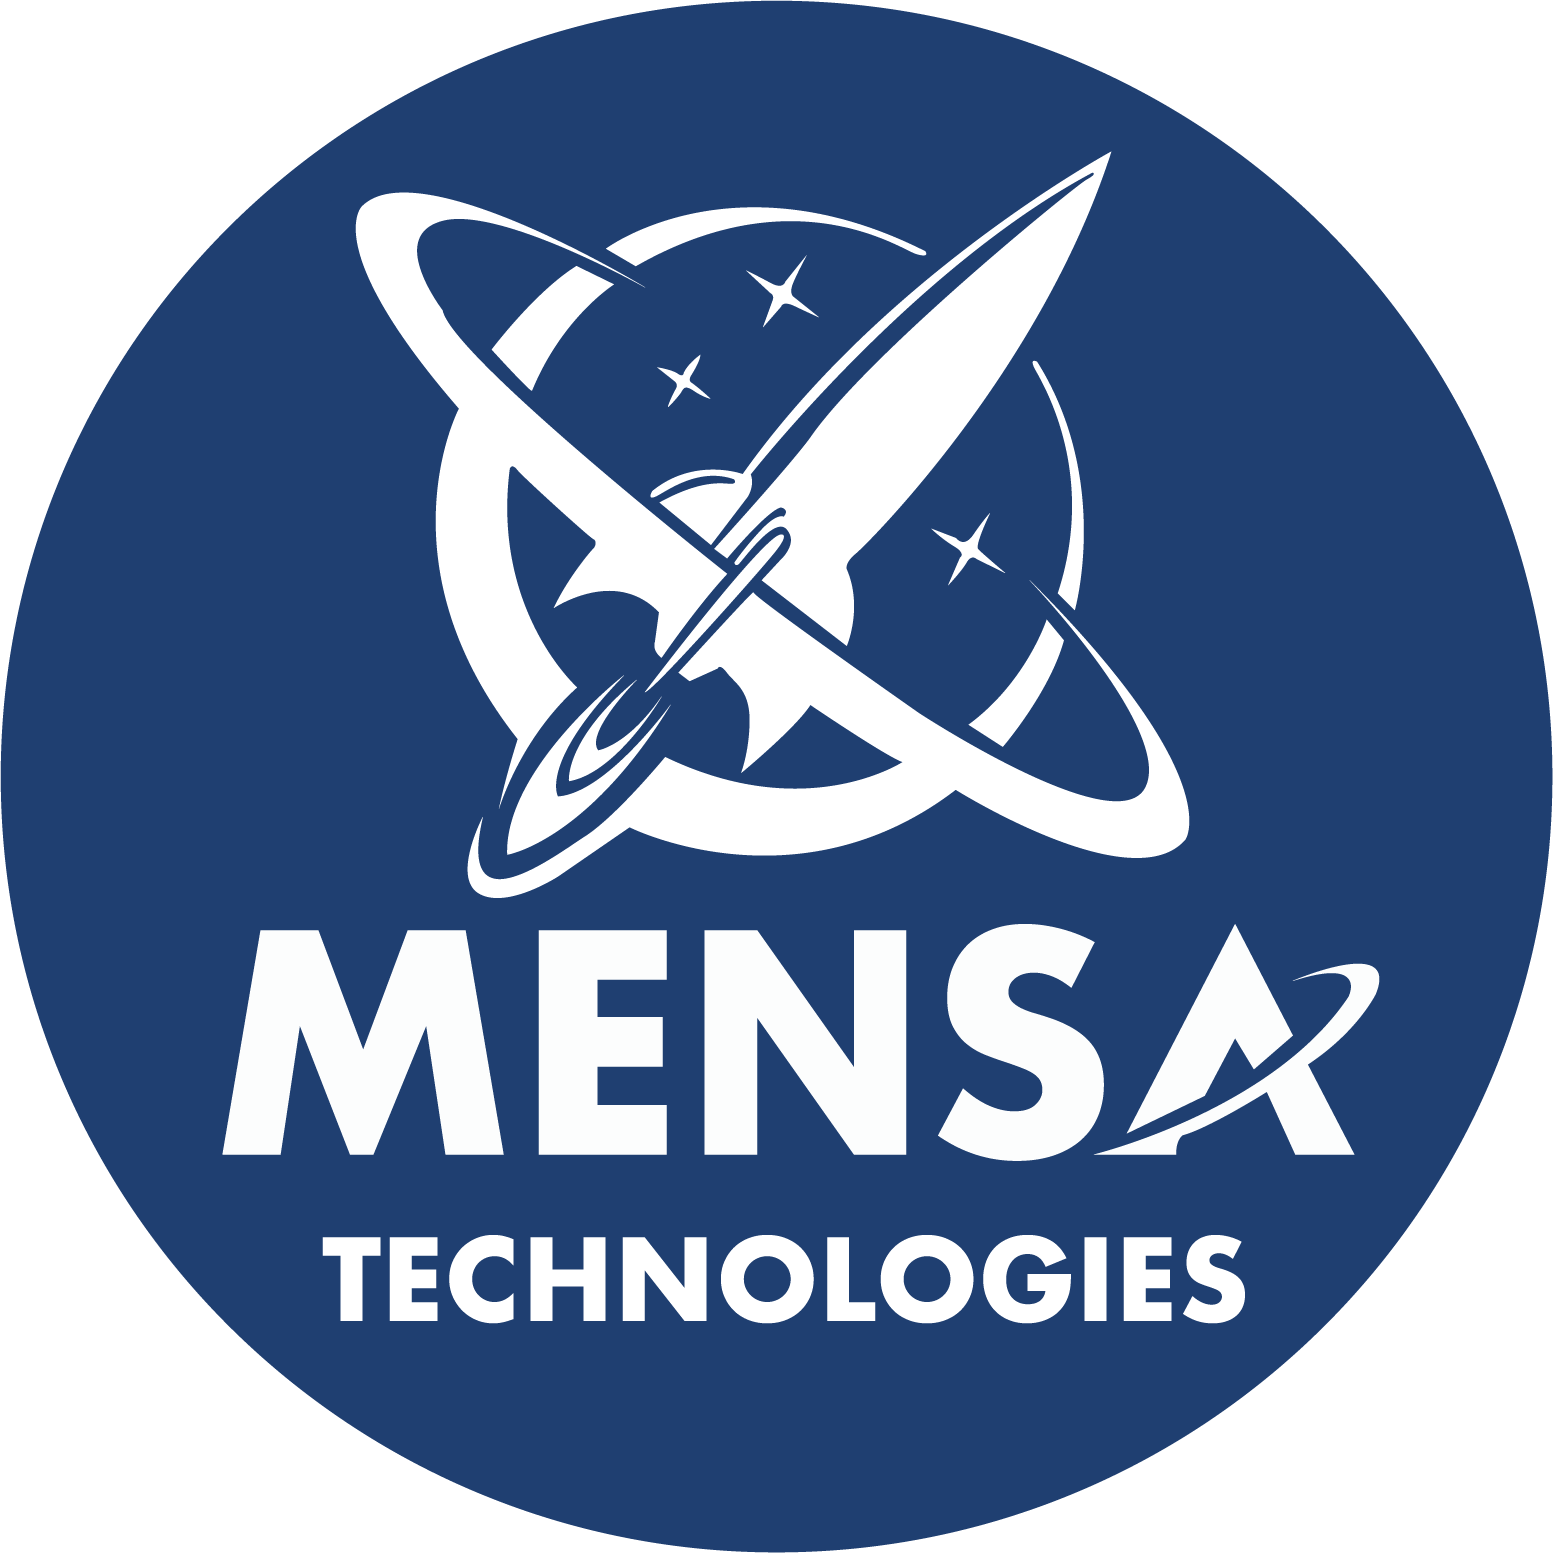 Mensa Technologies